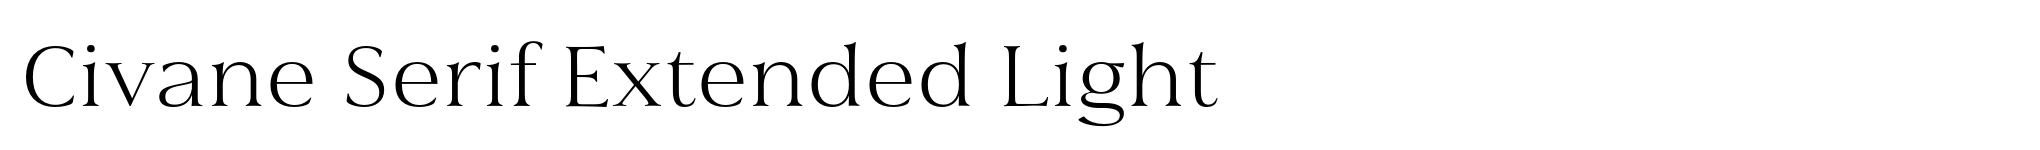 Civane Serif Extended Light image